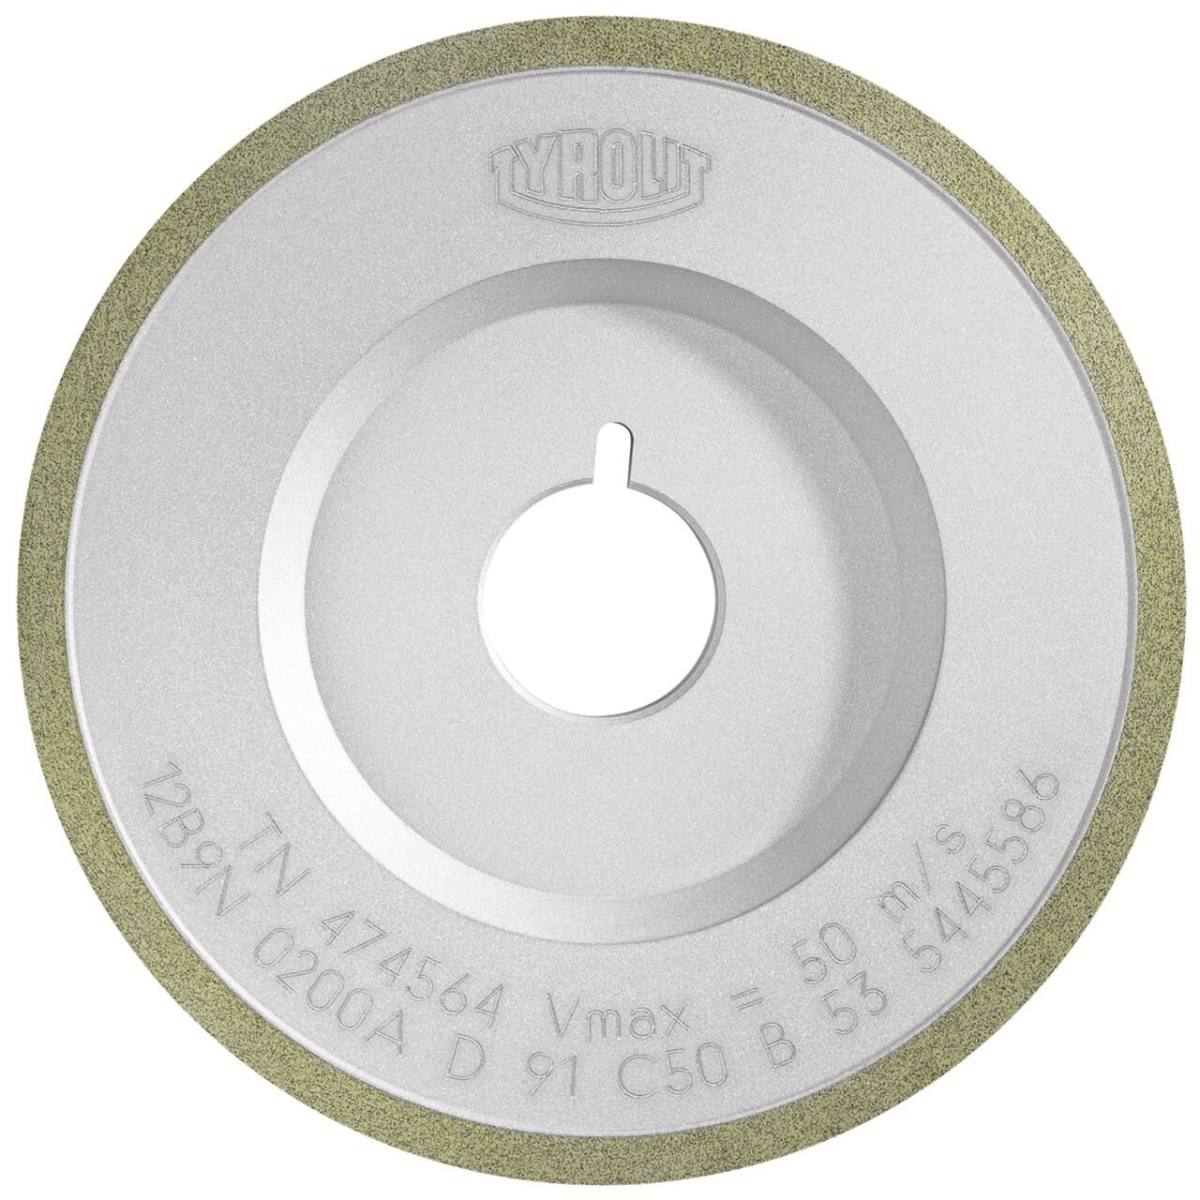 Tyrolit Discos de diamante con aglomerante de resina para mecanizado de flancos DxDxH 100x14x32 Para metal duro, forma: 12B9N, Art. 331135